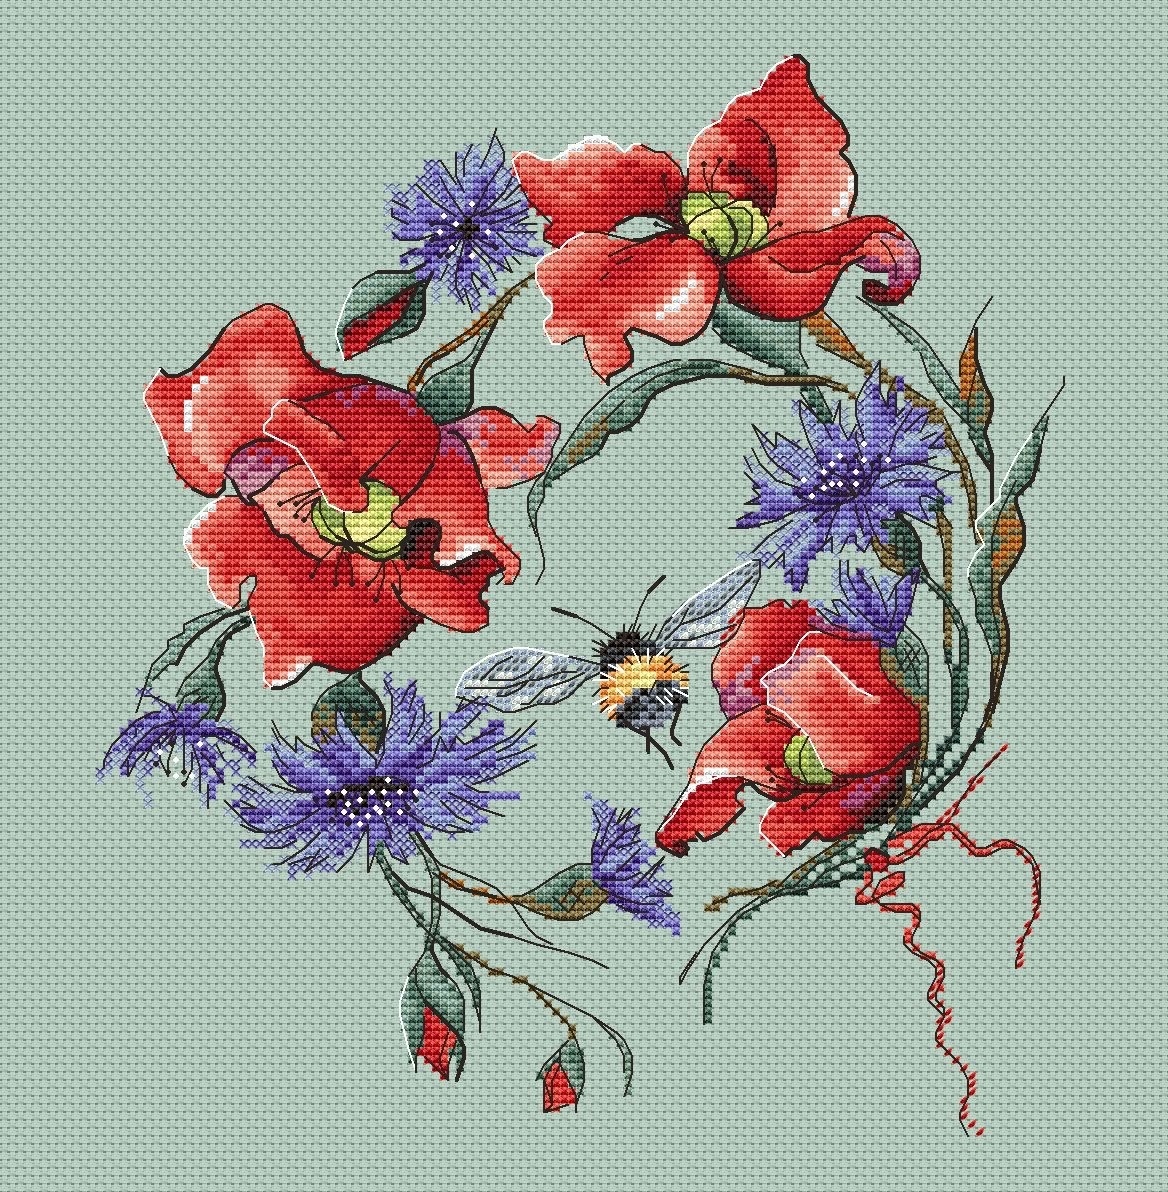 Poppy Wreath Cross Stitch Chart фото 1